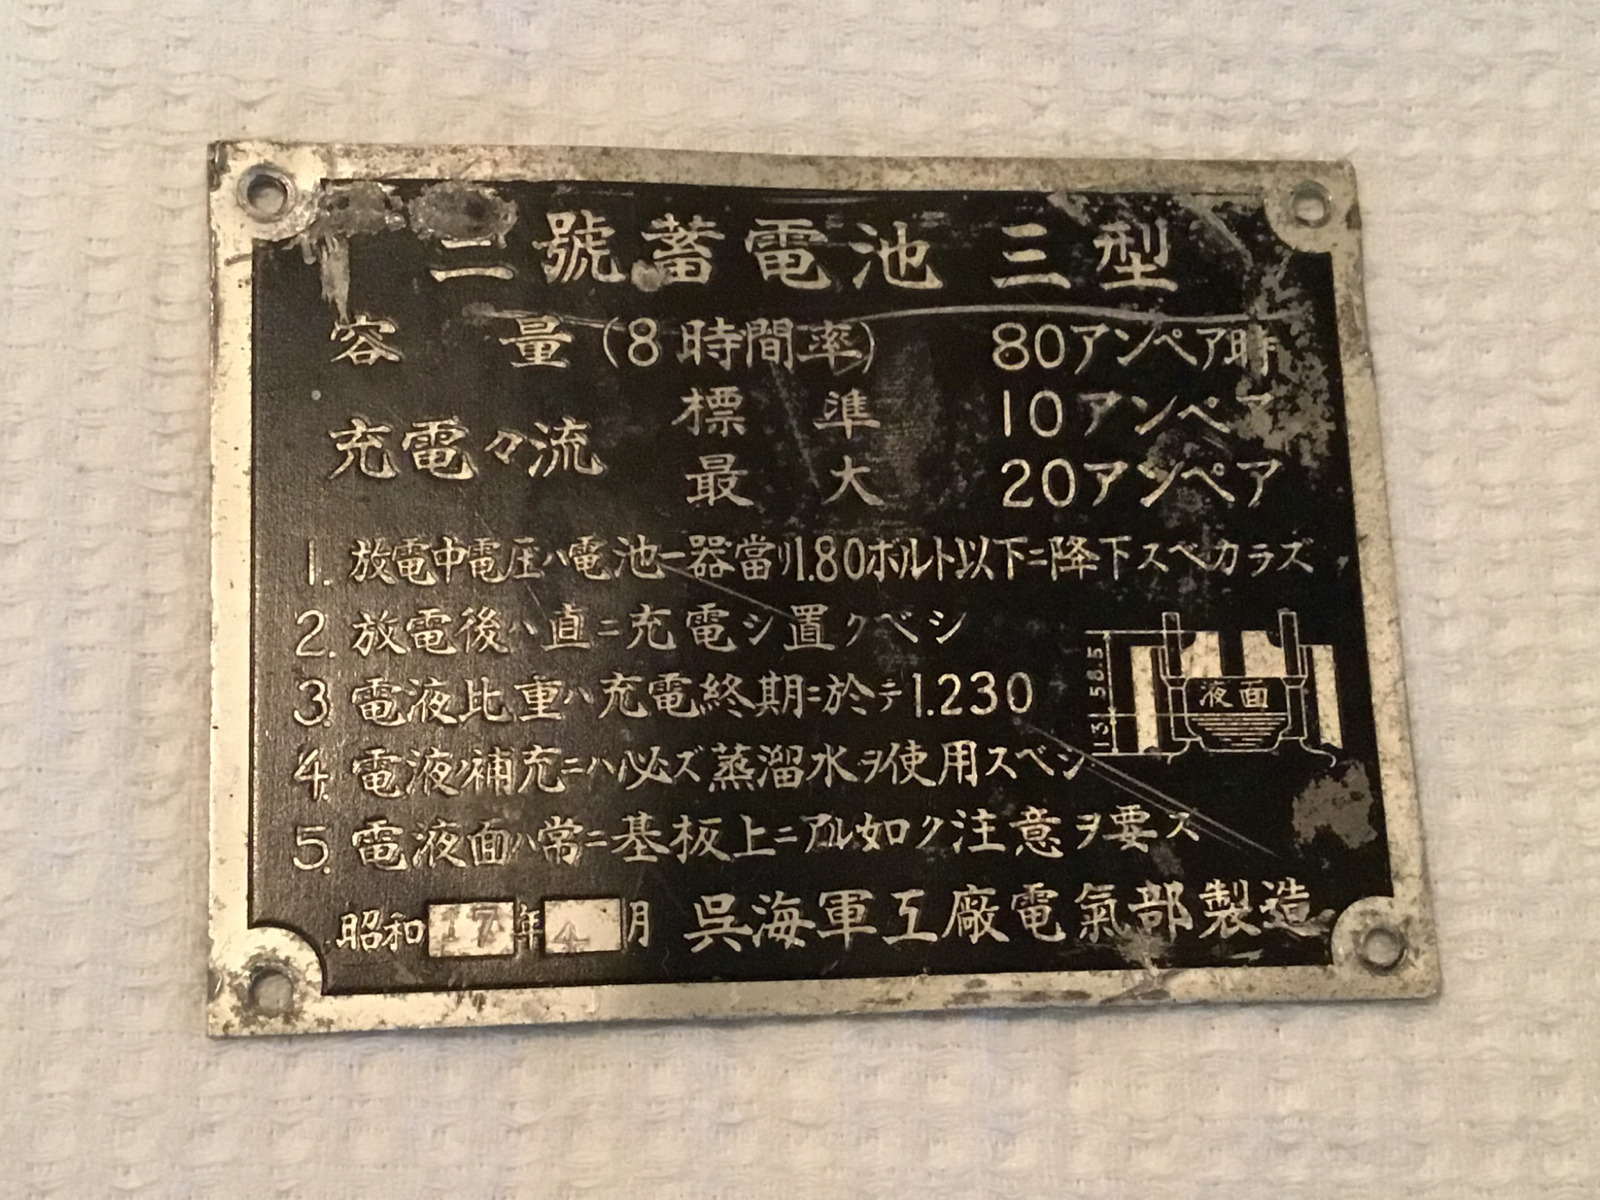 WWII WW2 Japanese aircraft generator ija ijn data plate tag dated April 1942